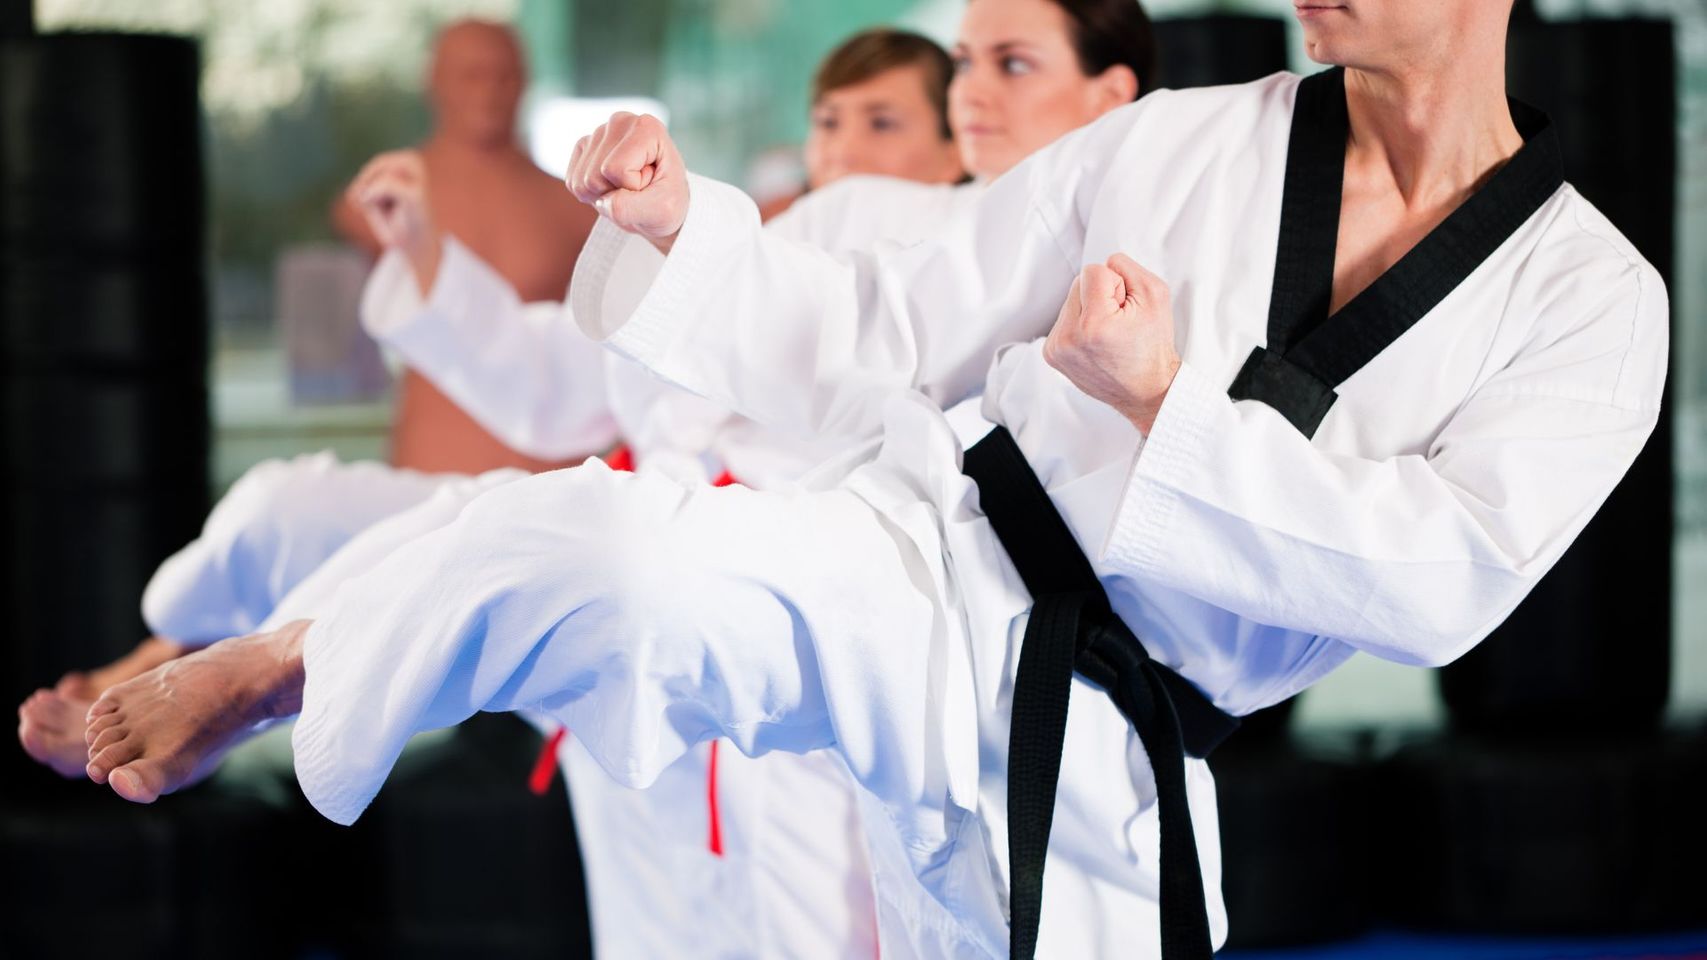 TaekwondoConditioning-hero.jpg